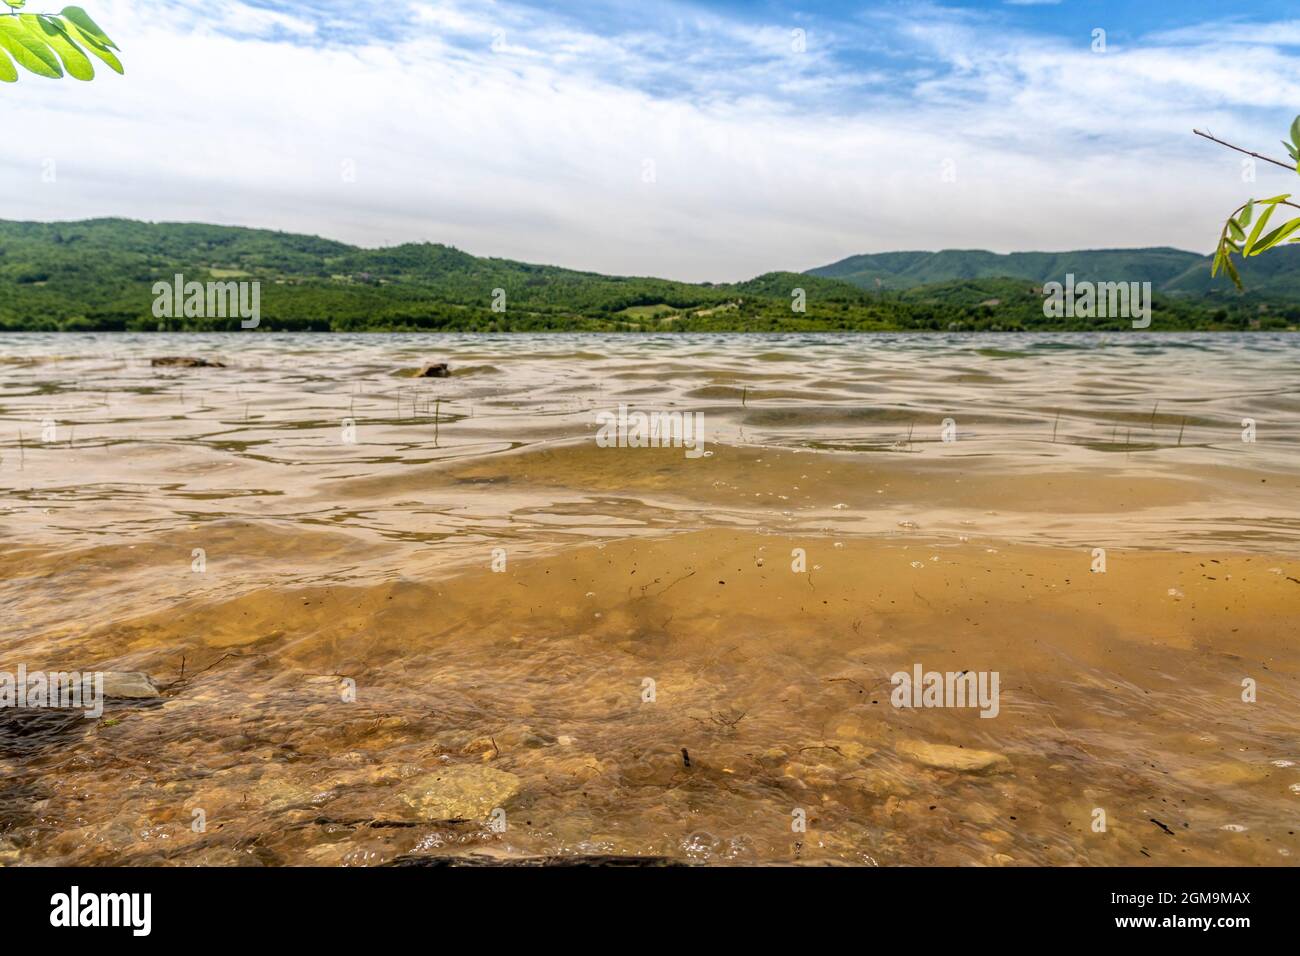 View of the Bilancino lake in Mugello in Tuscany - Italy Stock Photo